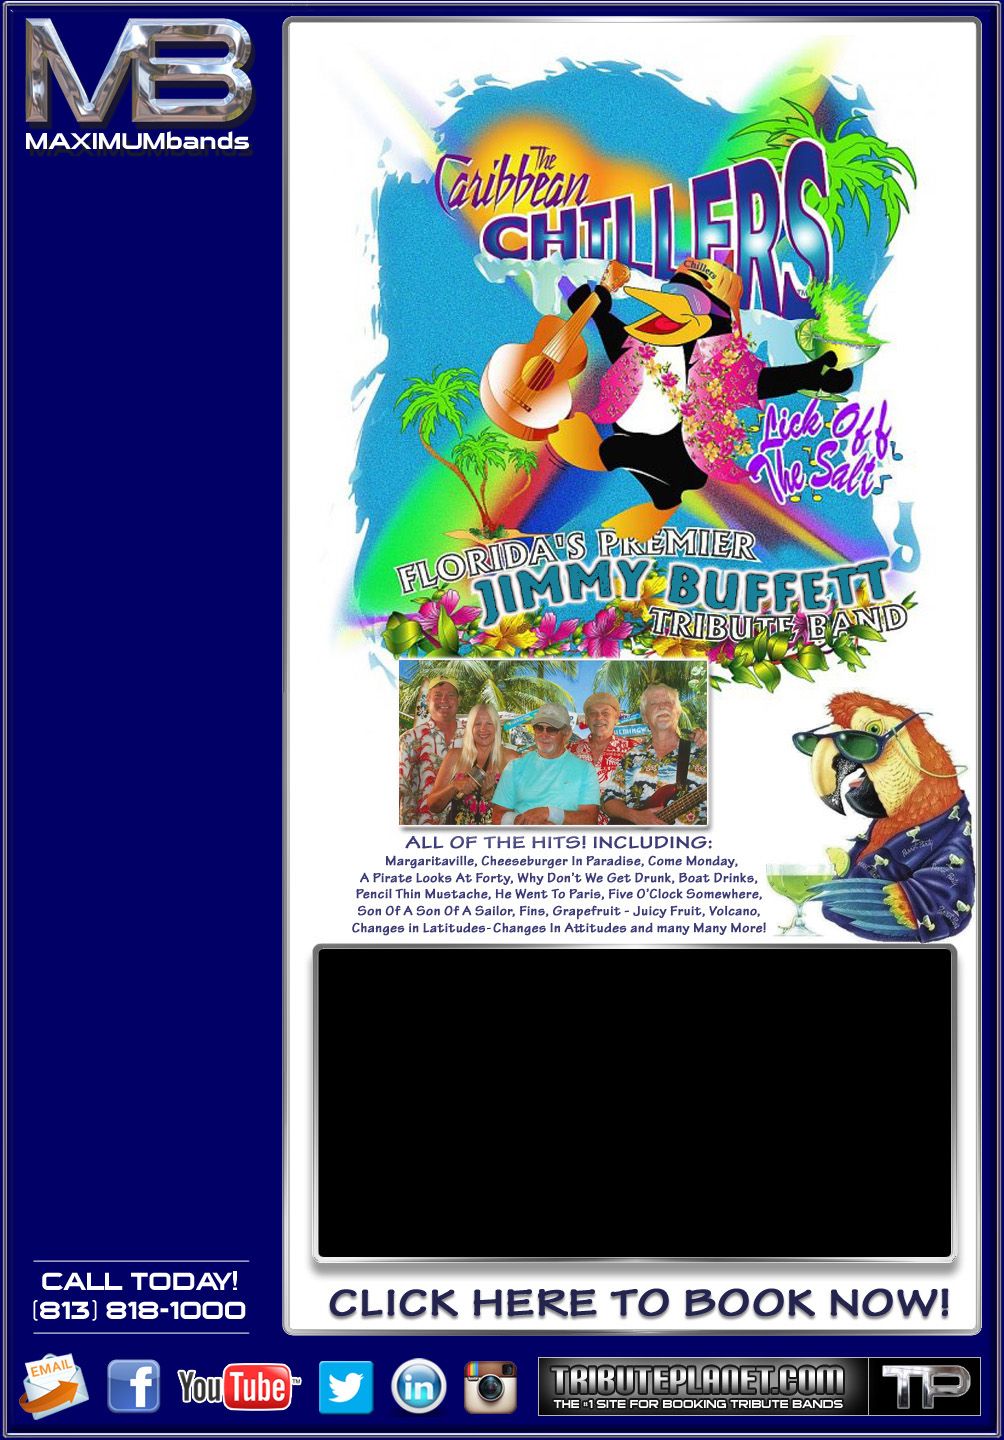 Caribbean Chillers - Jimmy Buffett Tribute